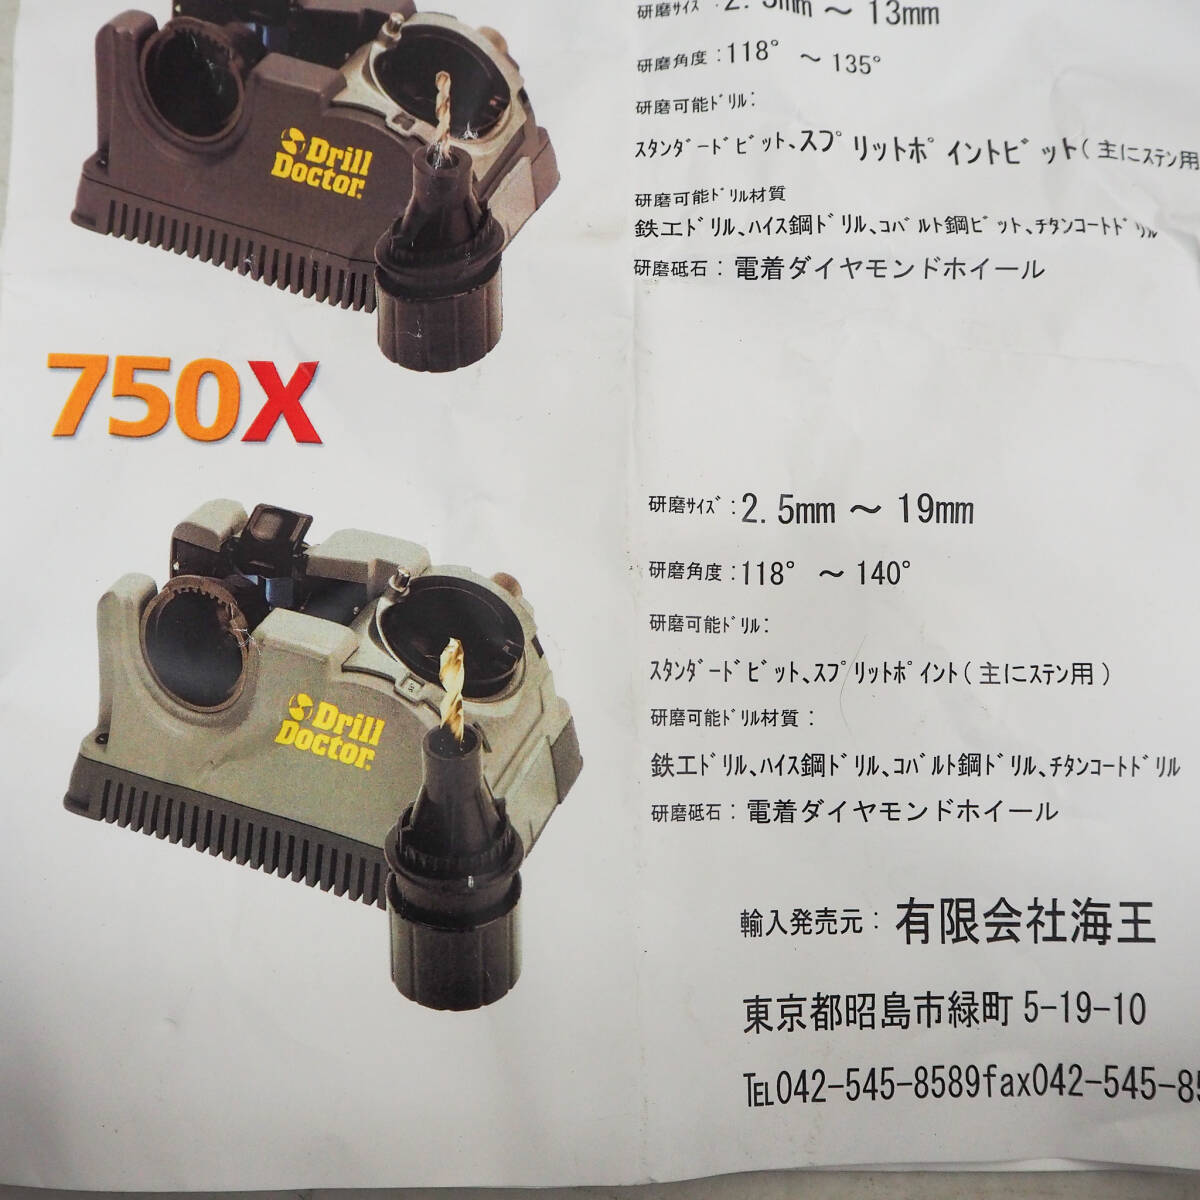 Drill Docter ドリルドクター 750X ドリルビット研磨機 研磨サイズ2.5mm〜19mm シャープナー 有限会社 海王 K5079の画像10